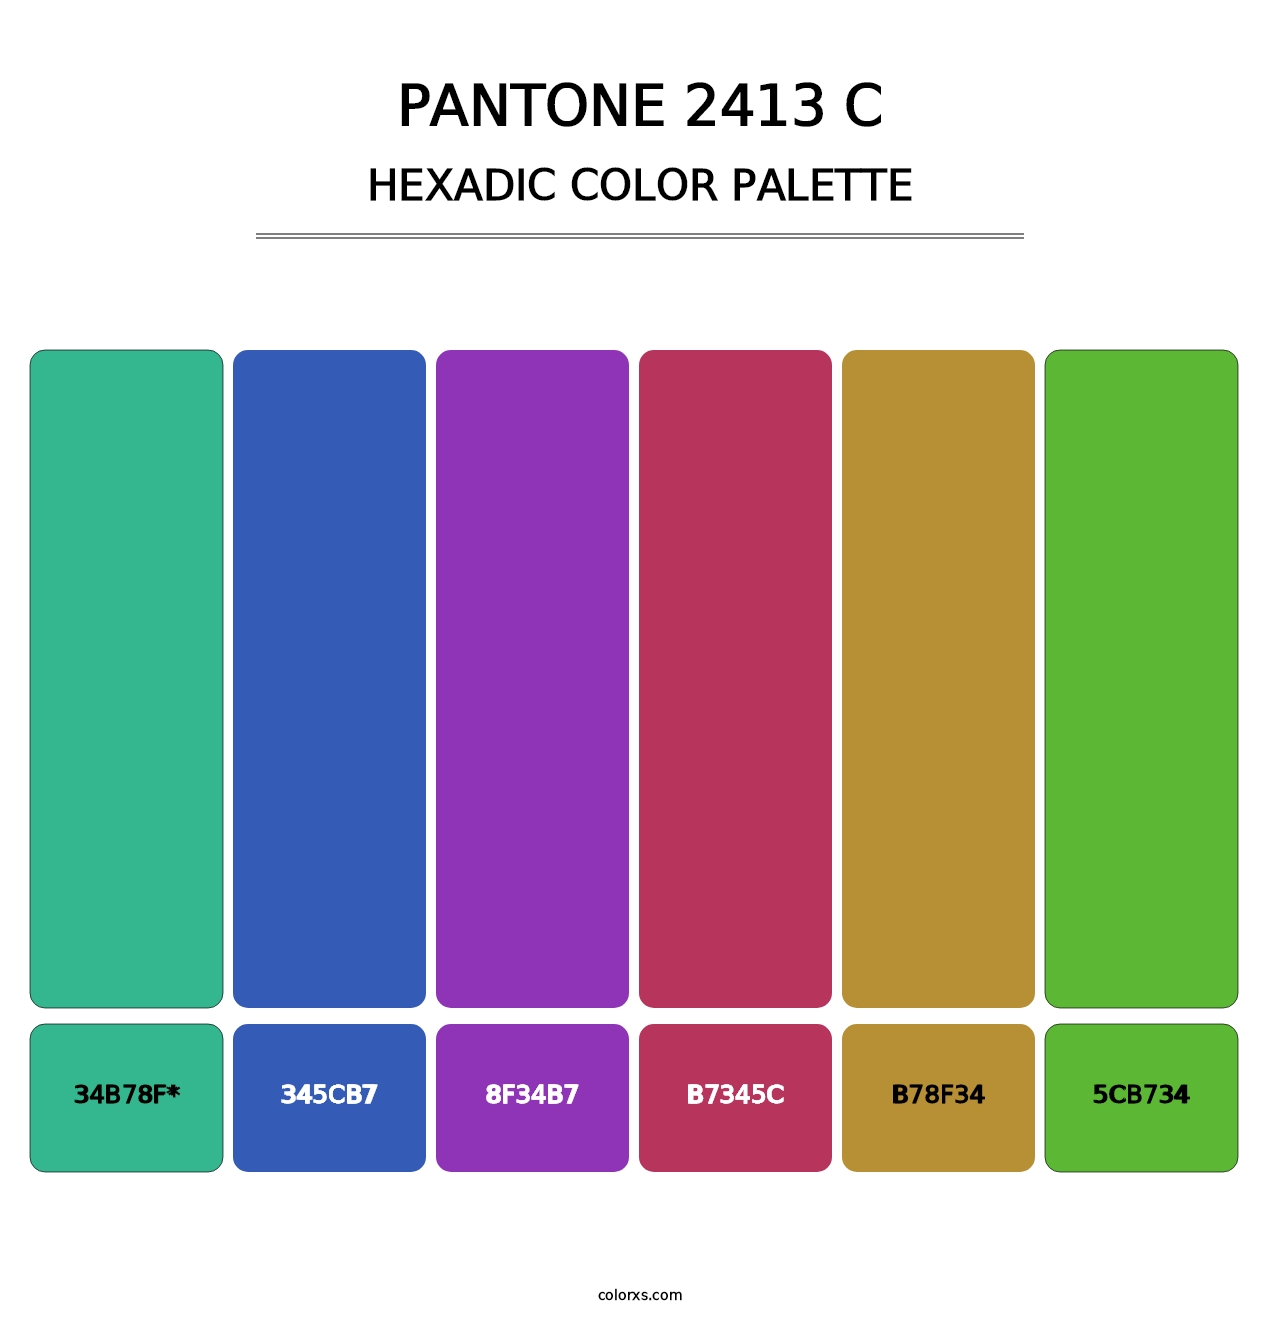 PANTONE 2413 C - Hexadic Color Palette